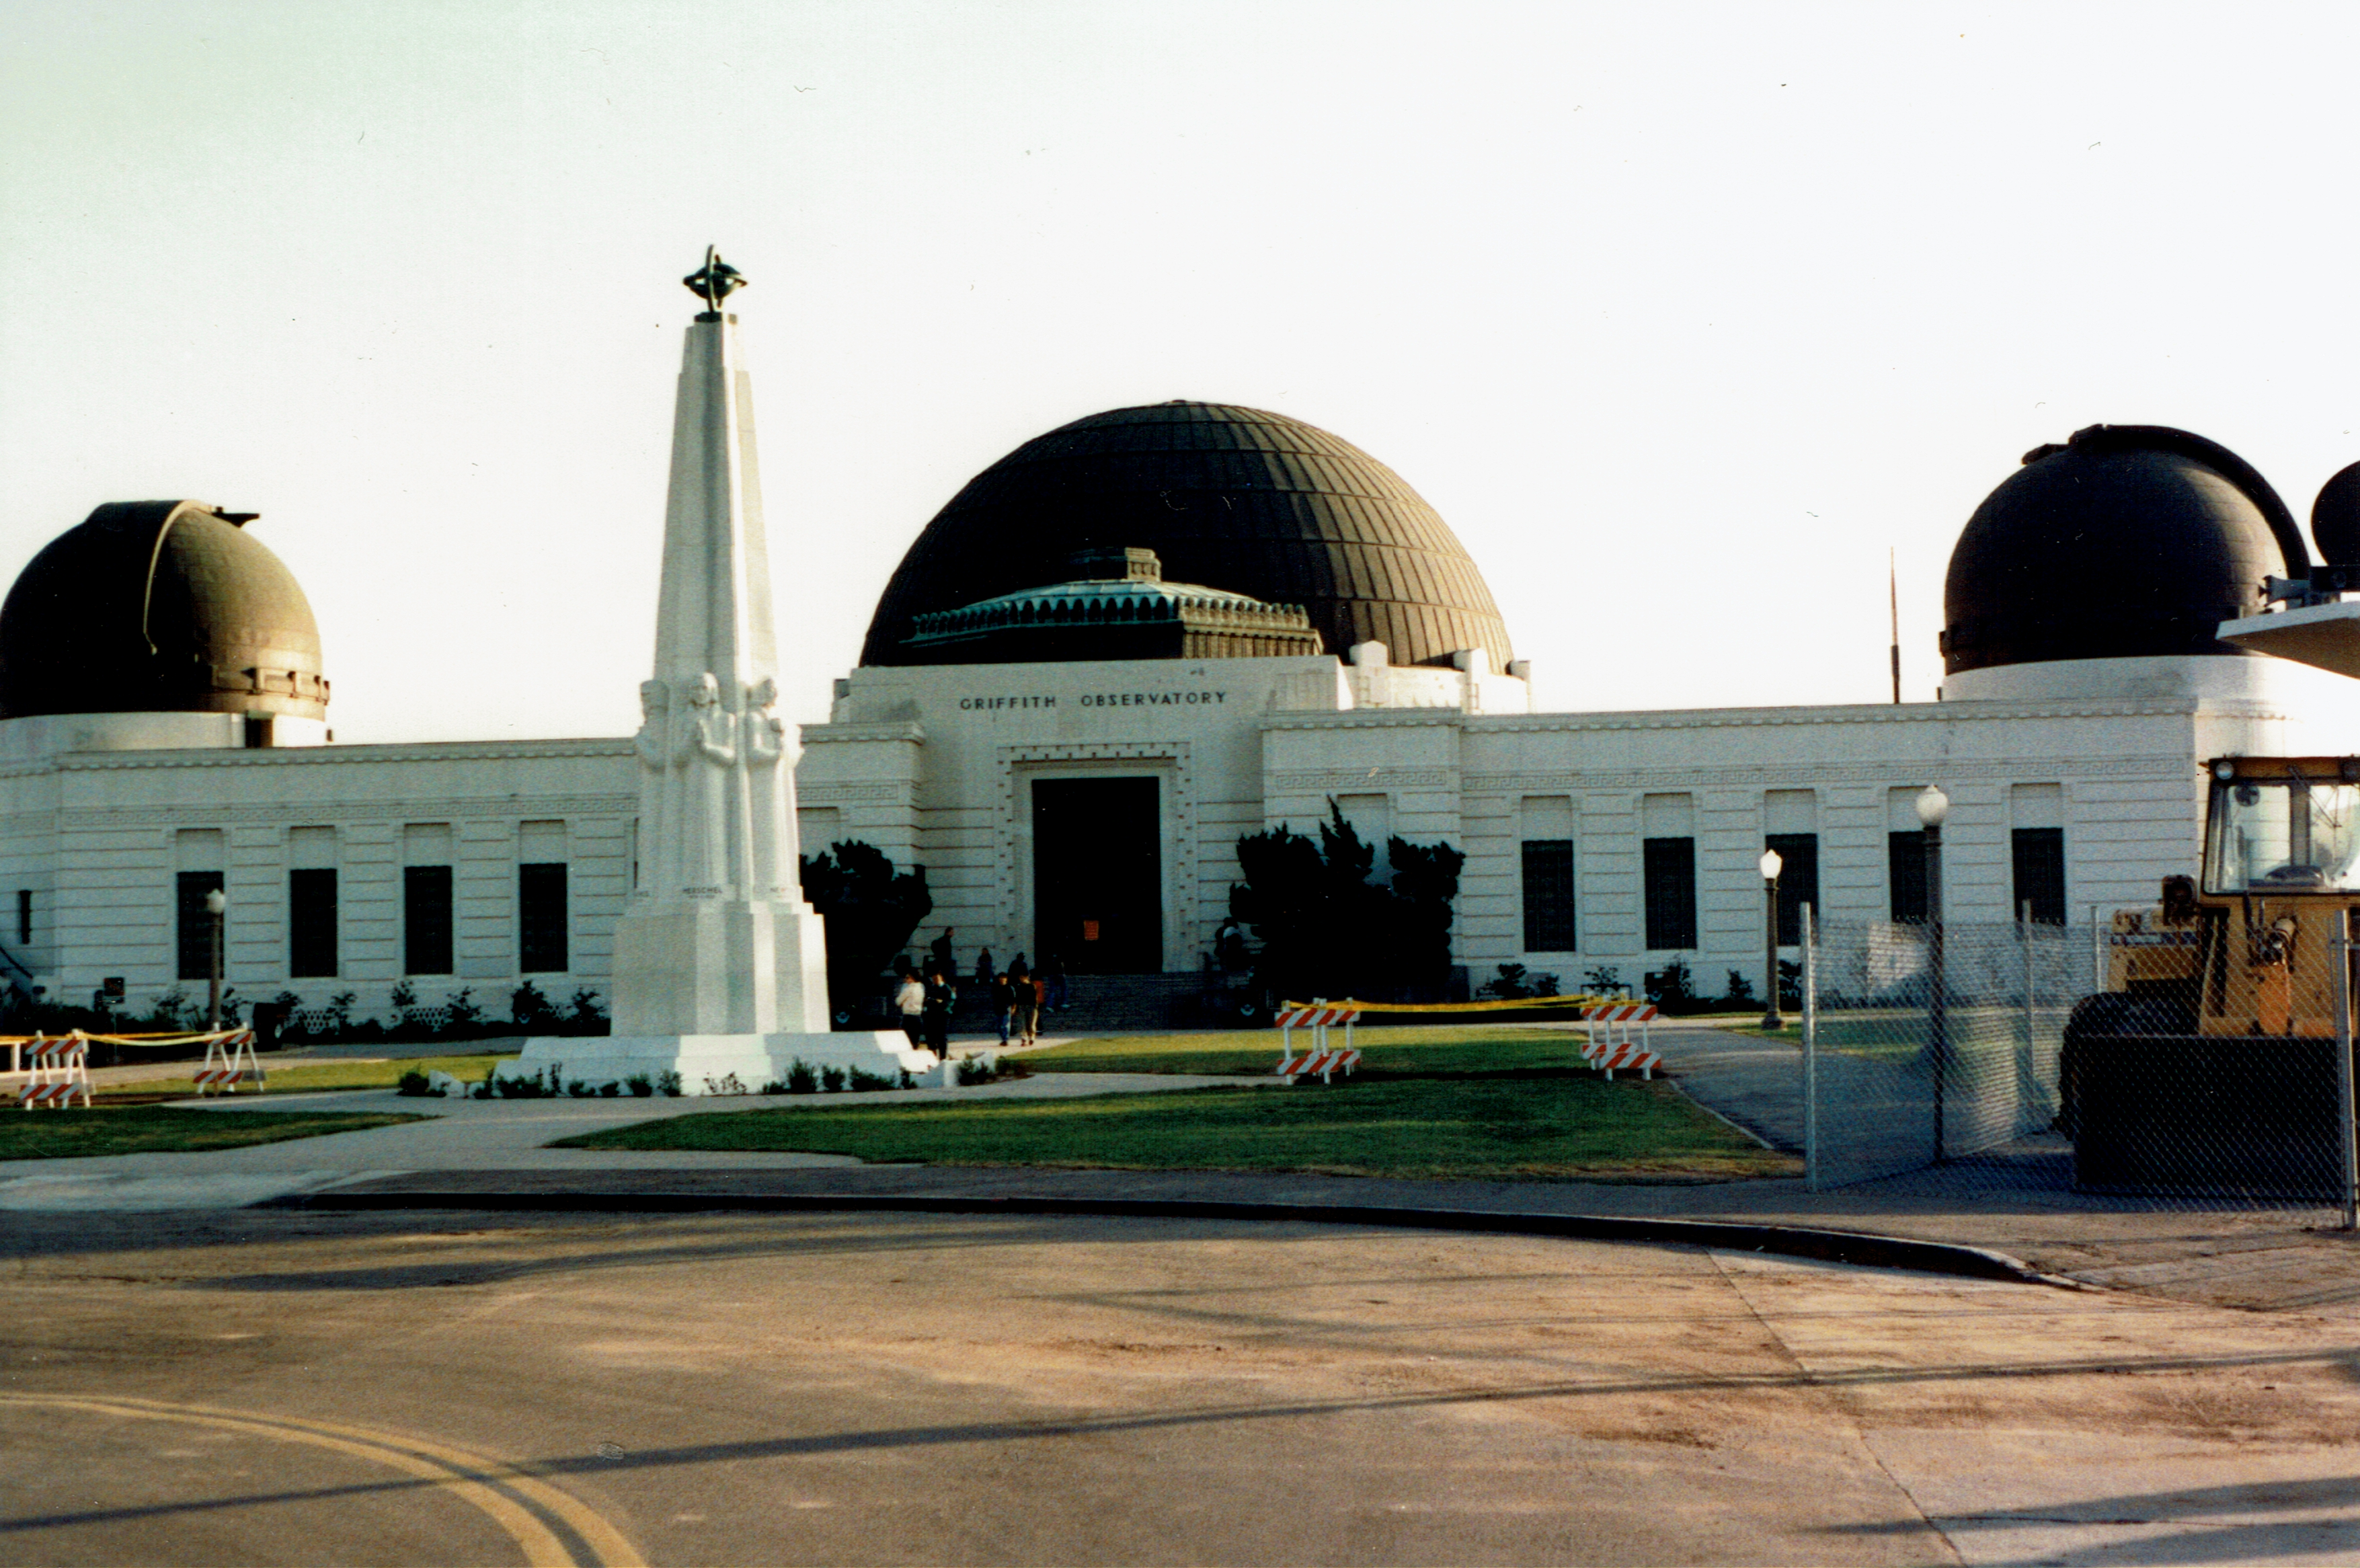 California_Griffith Observatory__Fujicolor 400